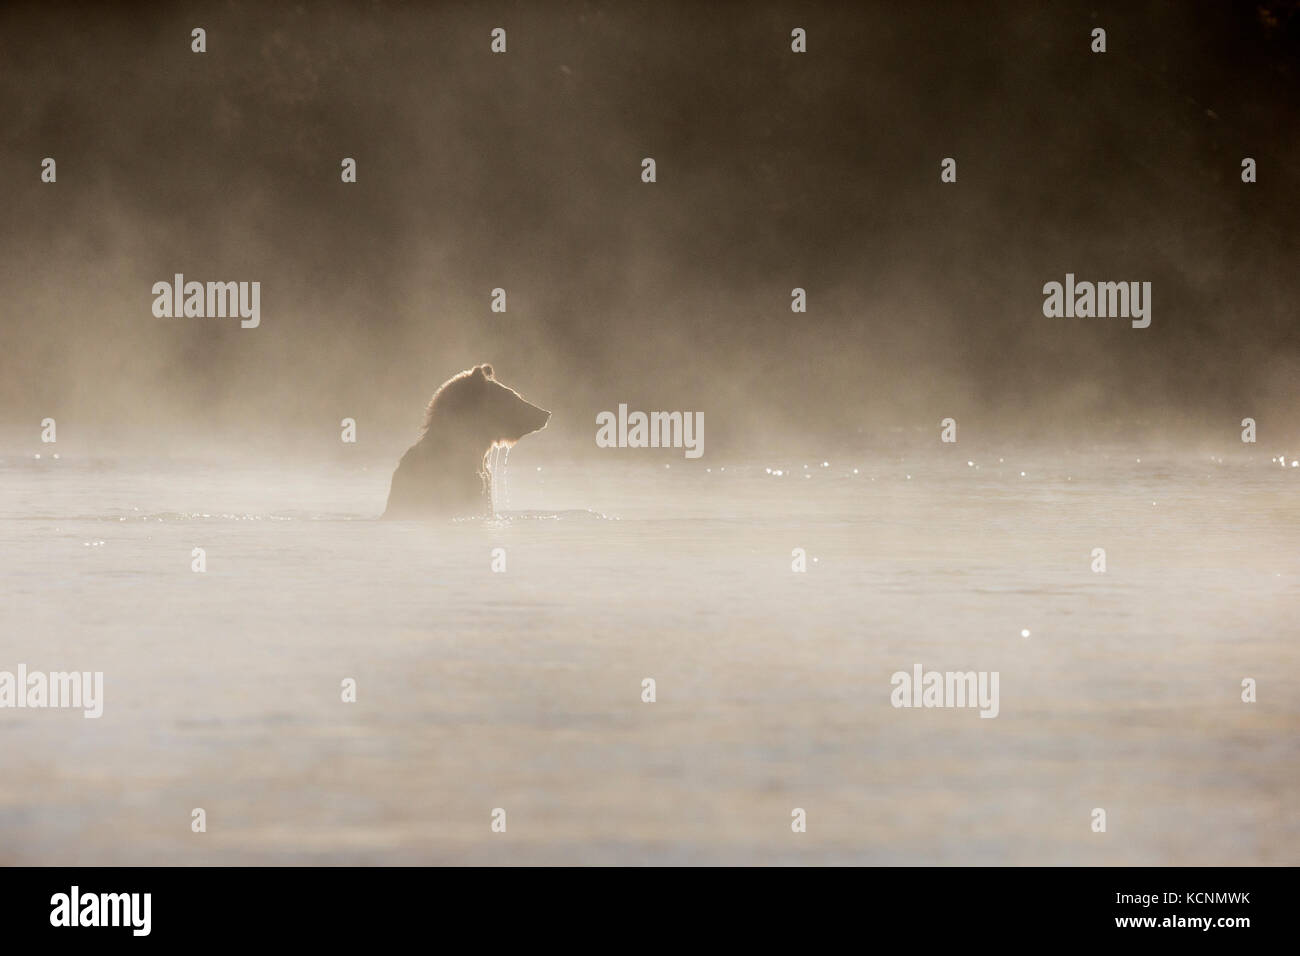 Orso grizzly (Ursus arctos horribilis), due-anno vecchio cub nella nebbia mattutina, regione chilcotin, British Columbia, Canada. Foto Stock